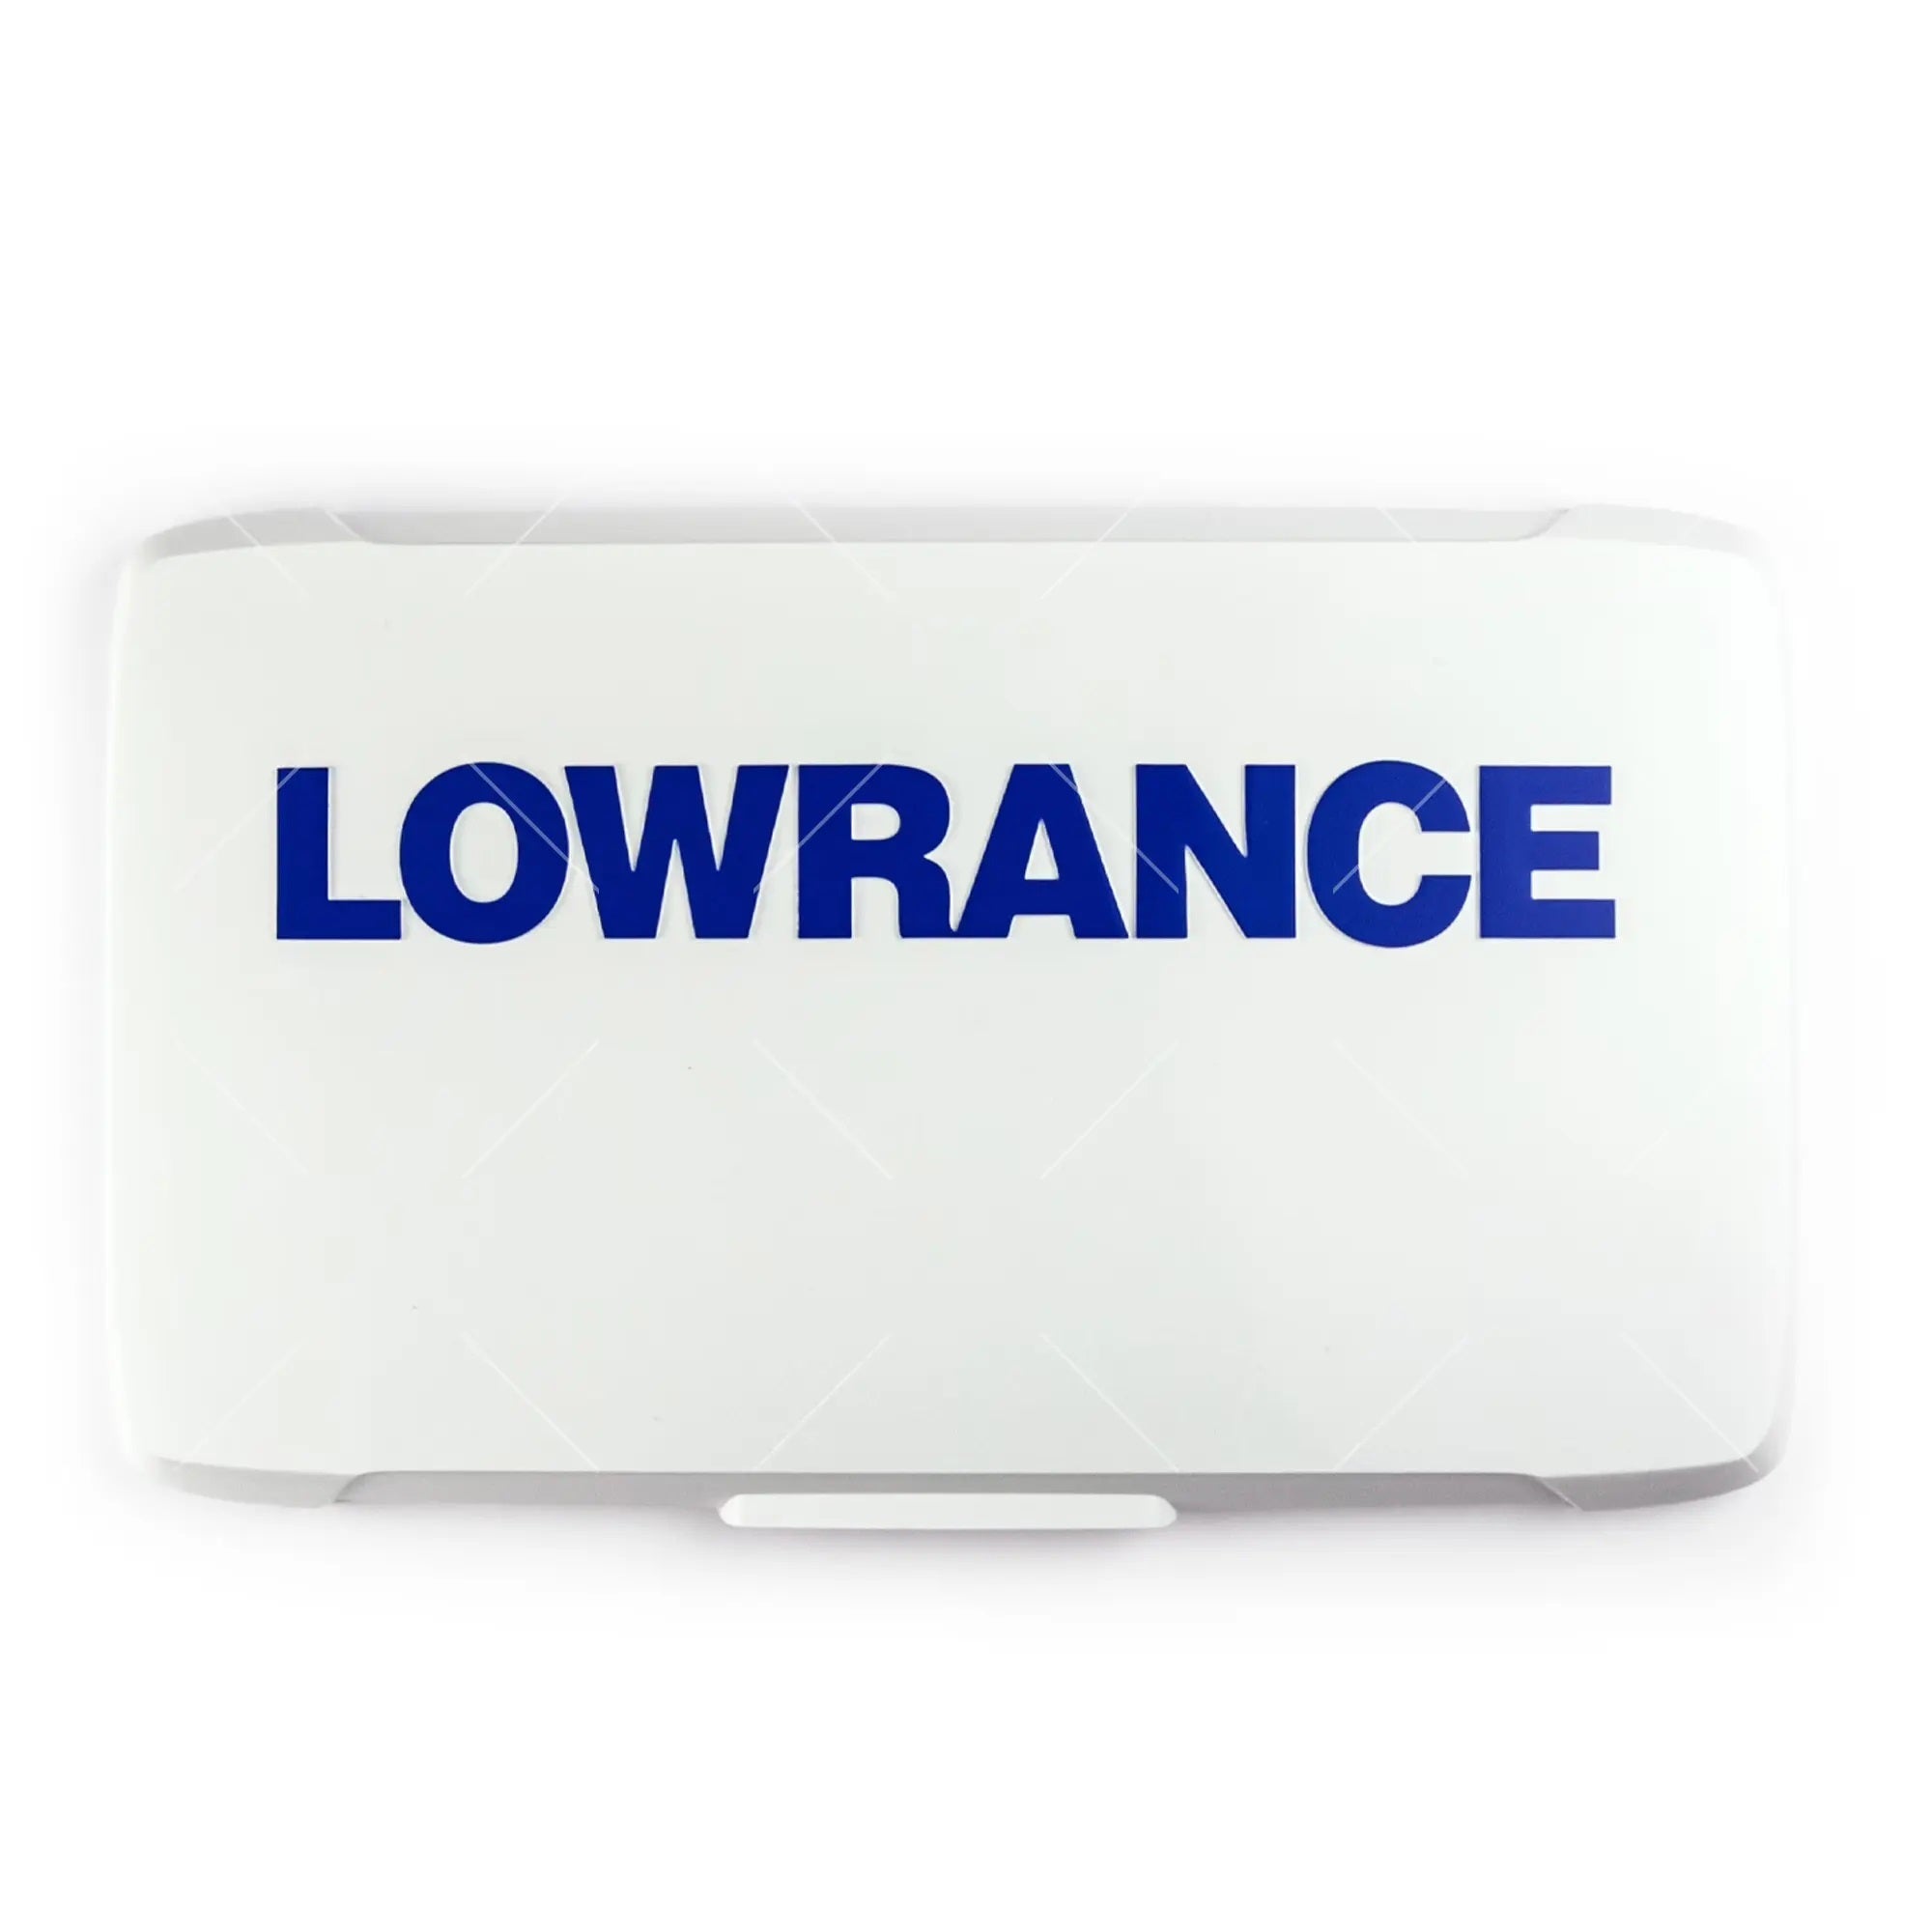 000-16250-001,Lowrance